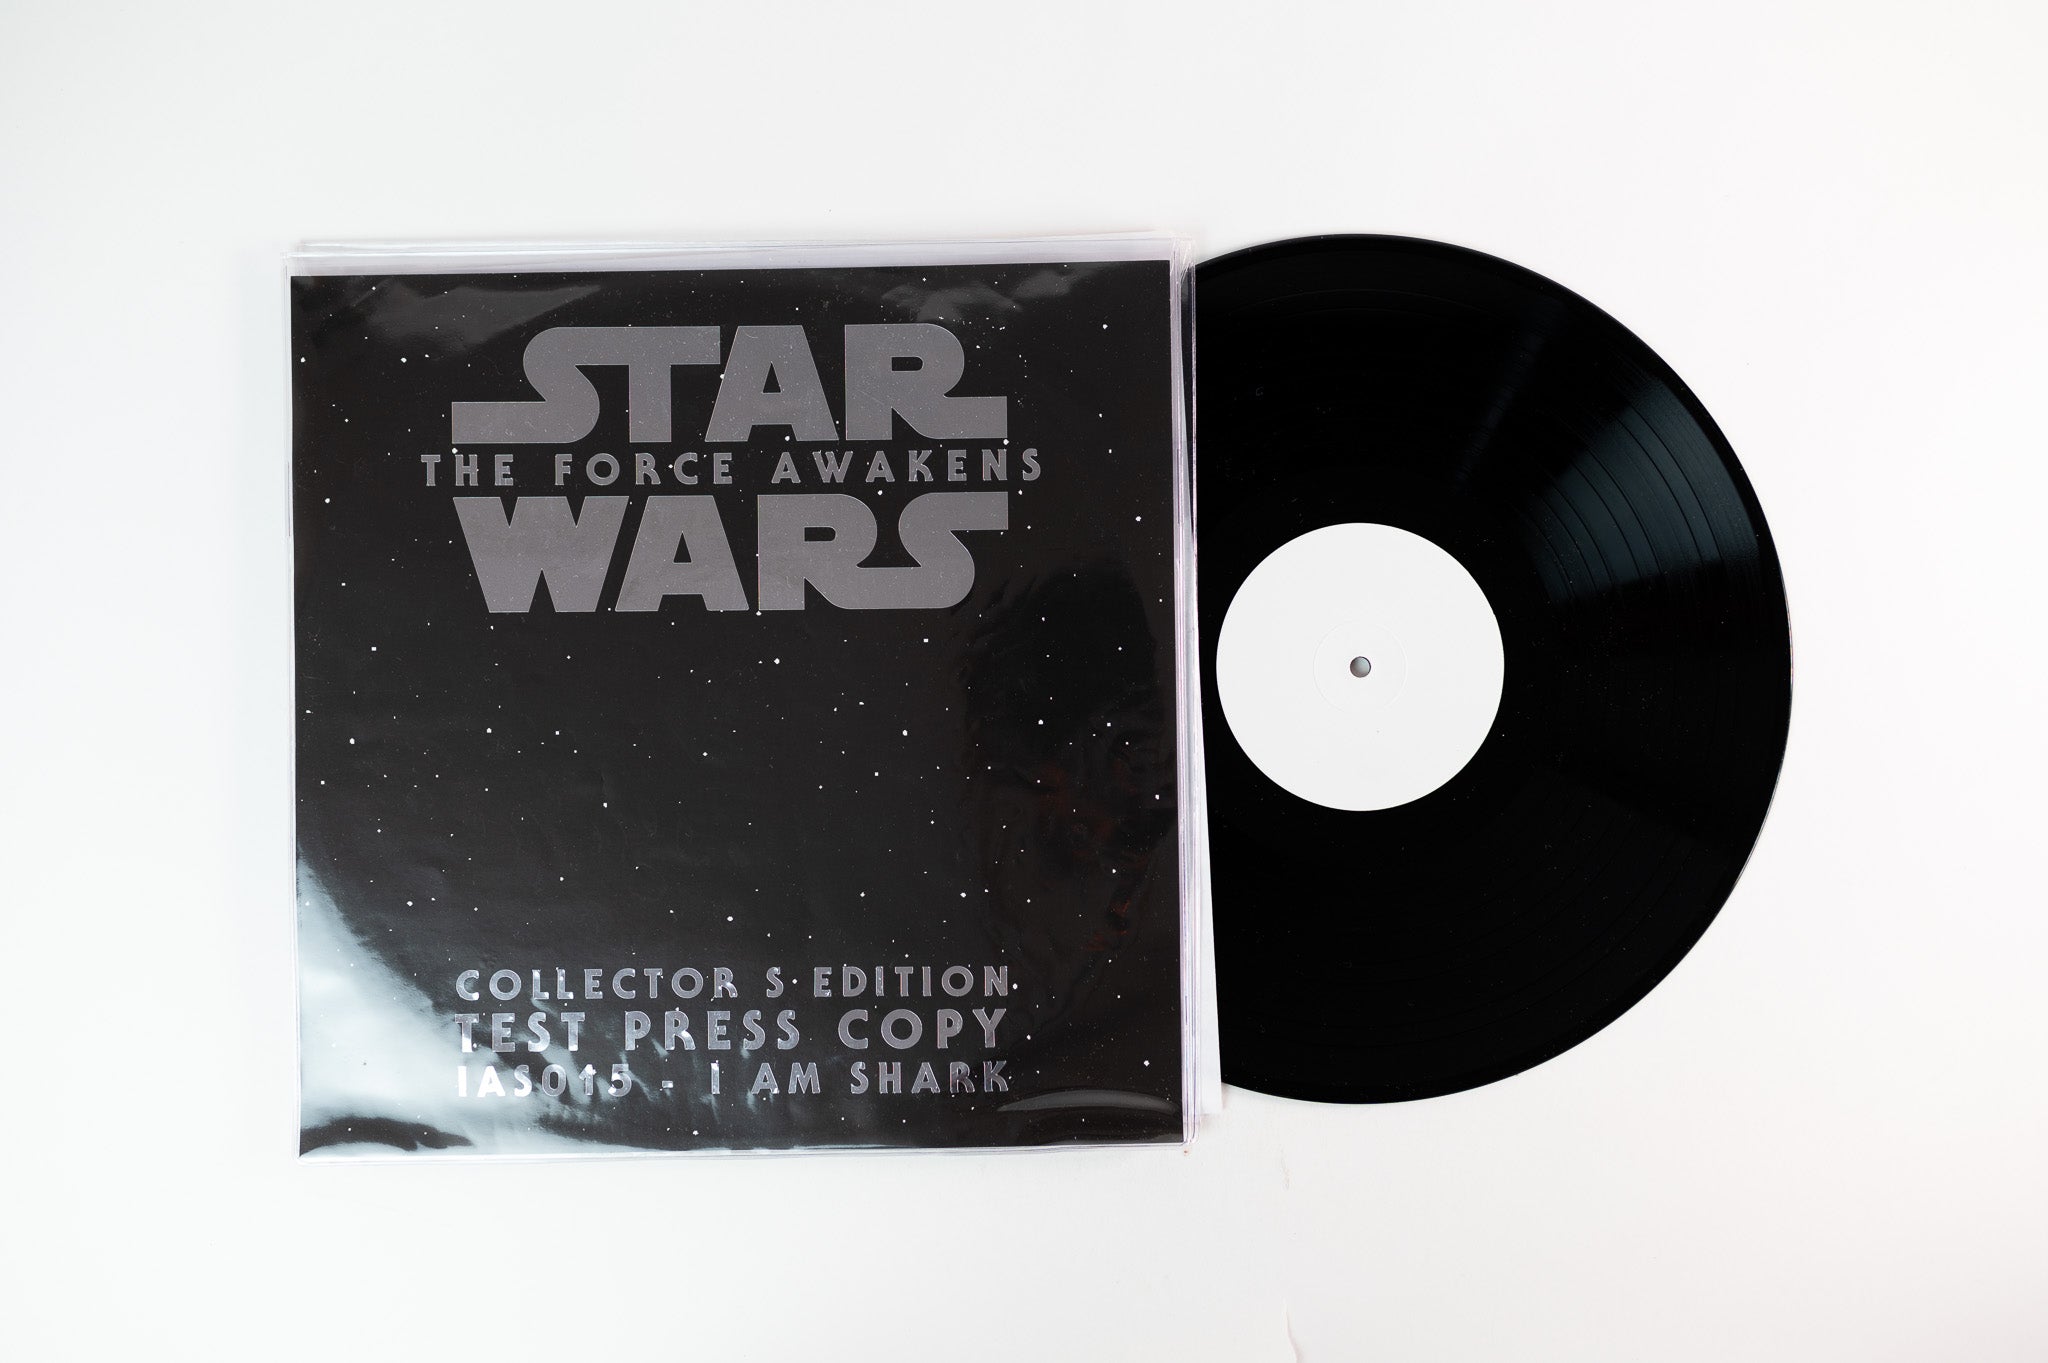 John Williams - Star Wars: The Force Awakens (Original Soundtrack) I Am Shark Collectors Edition Test Pressing